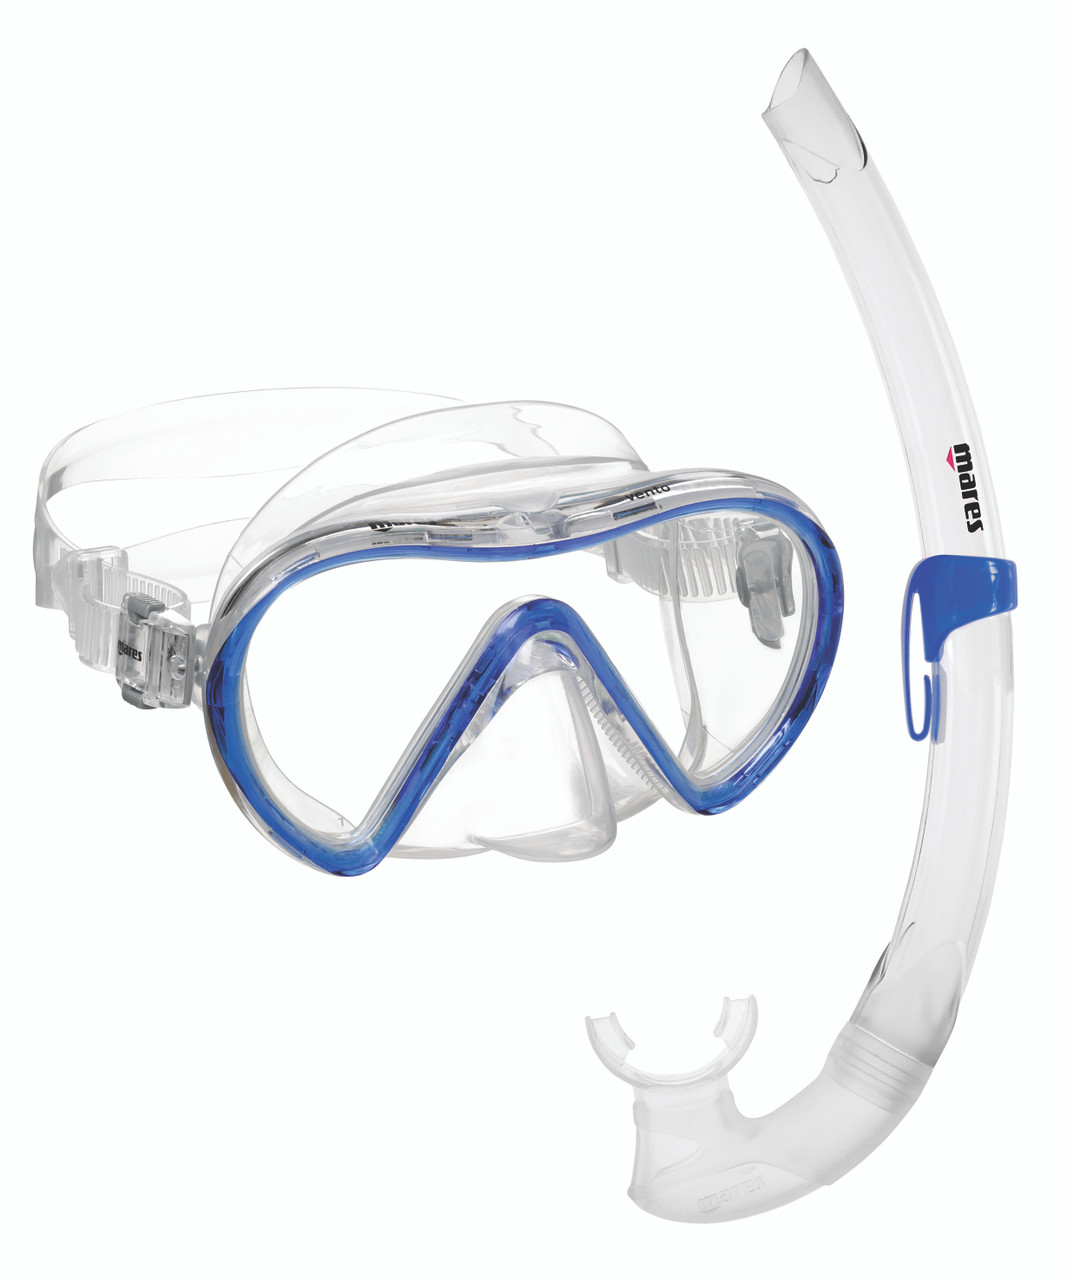 Colour Choice. Mares Aquazone Vento Junior Silicone Mask & Snorkel Set